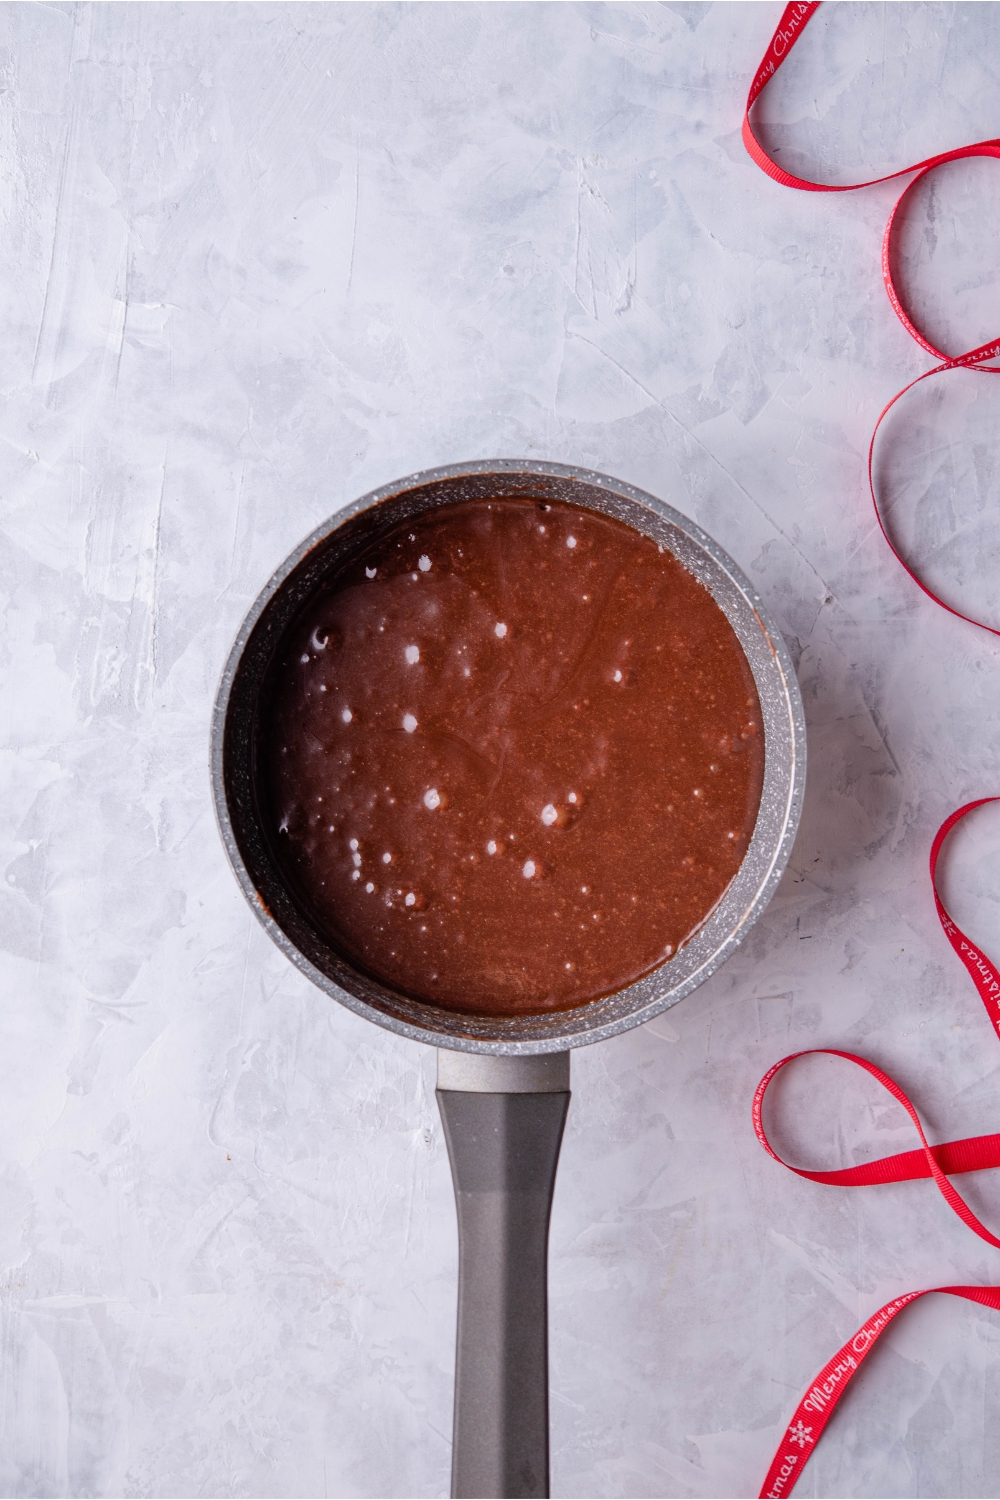 Saucepan filled with chocolate fudge batter.